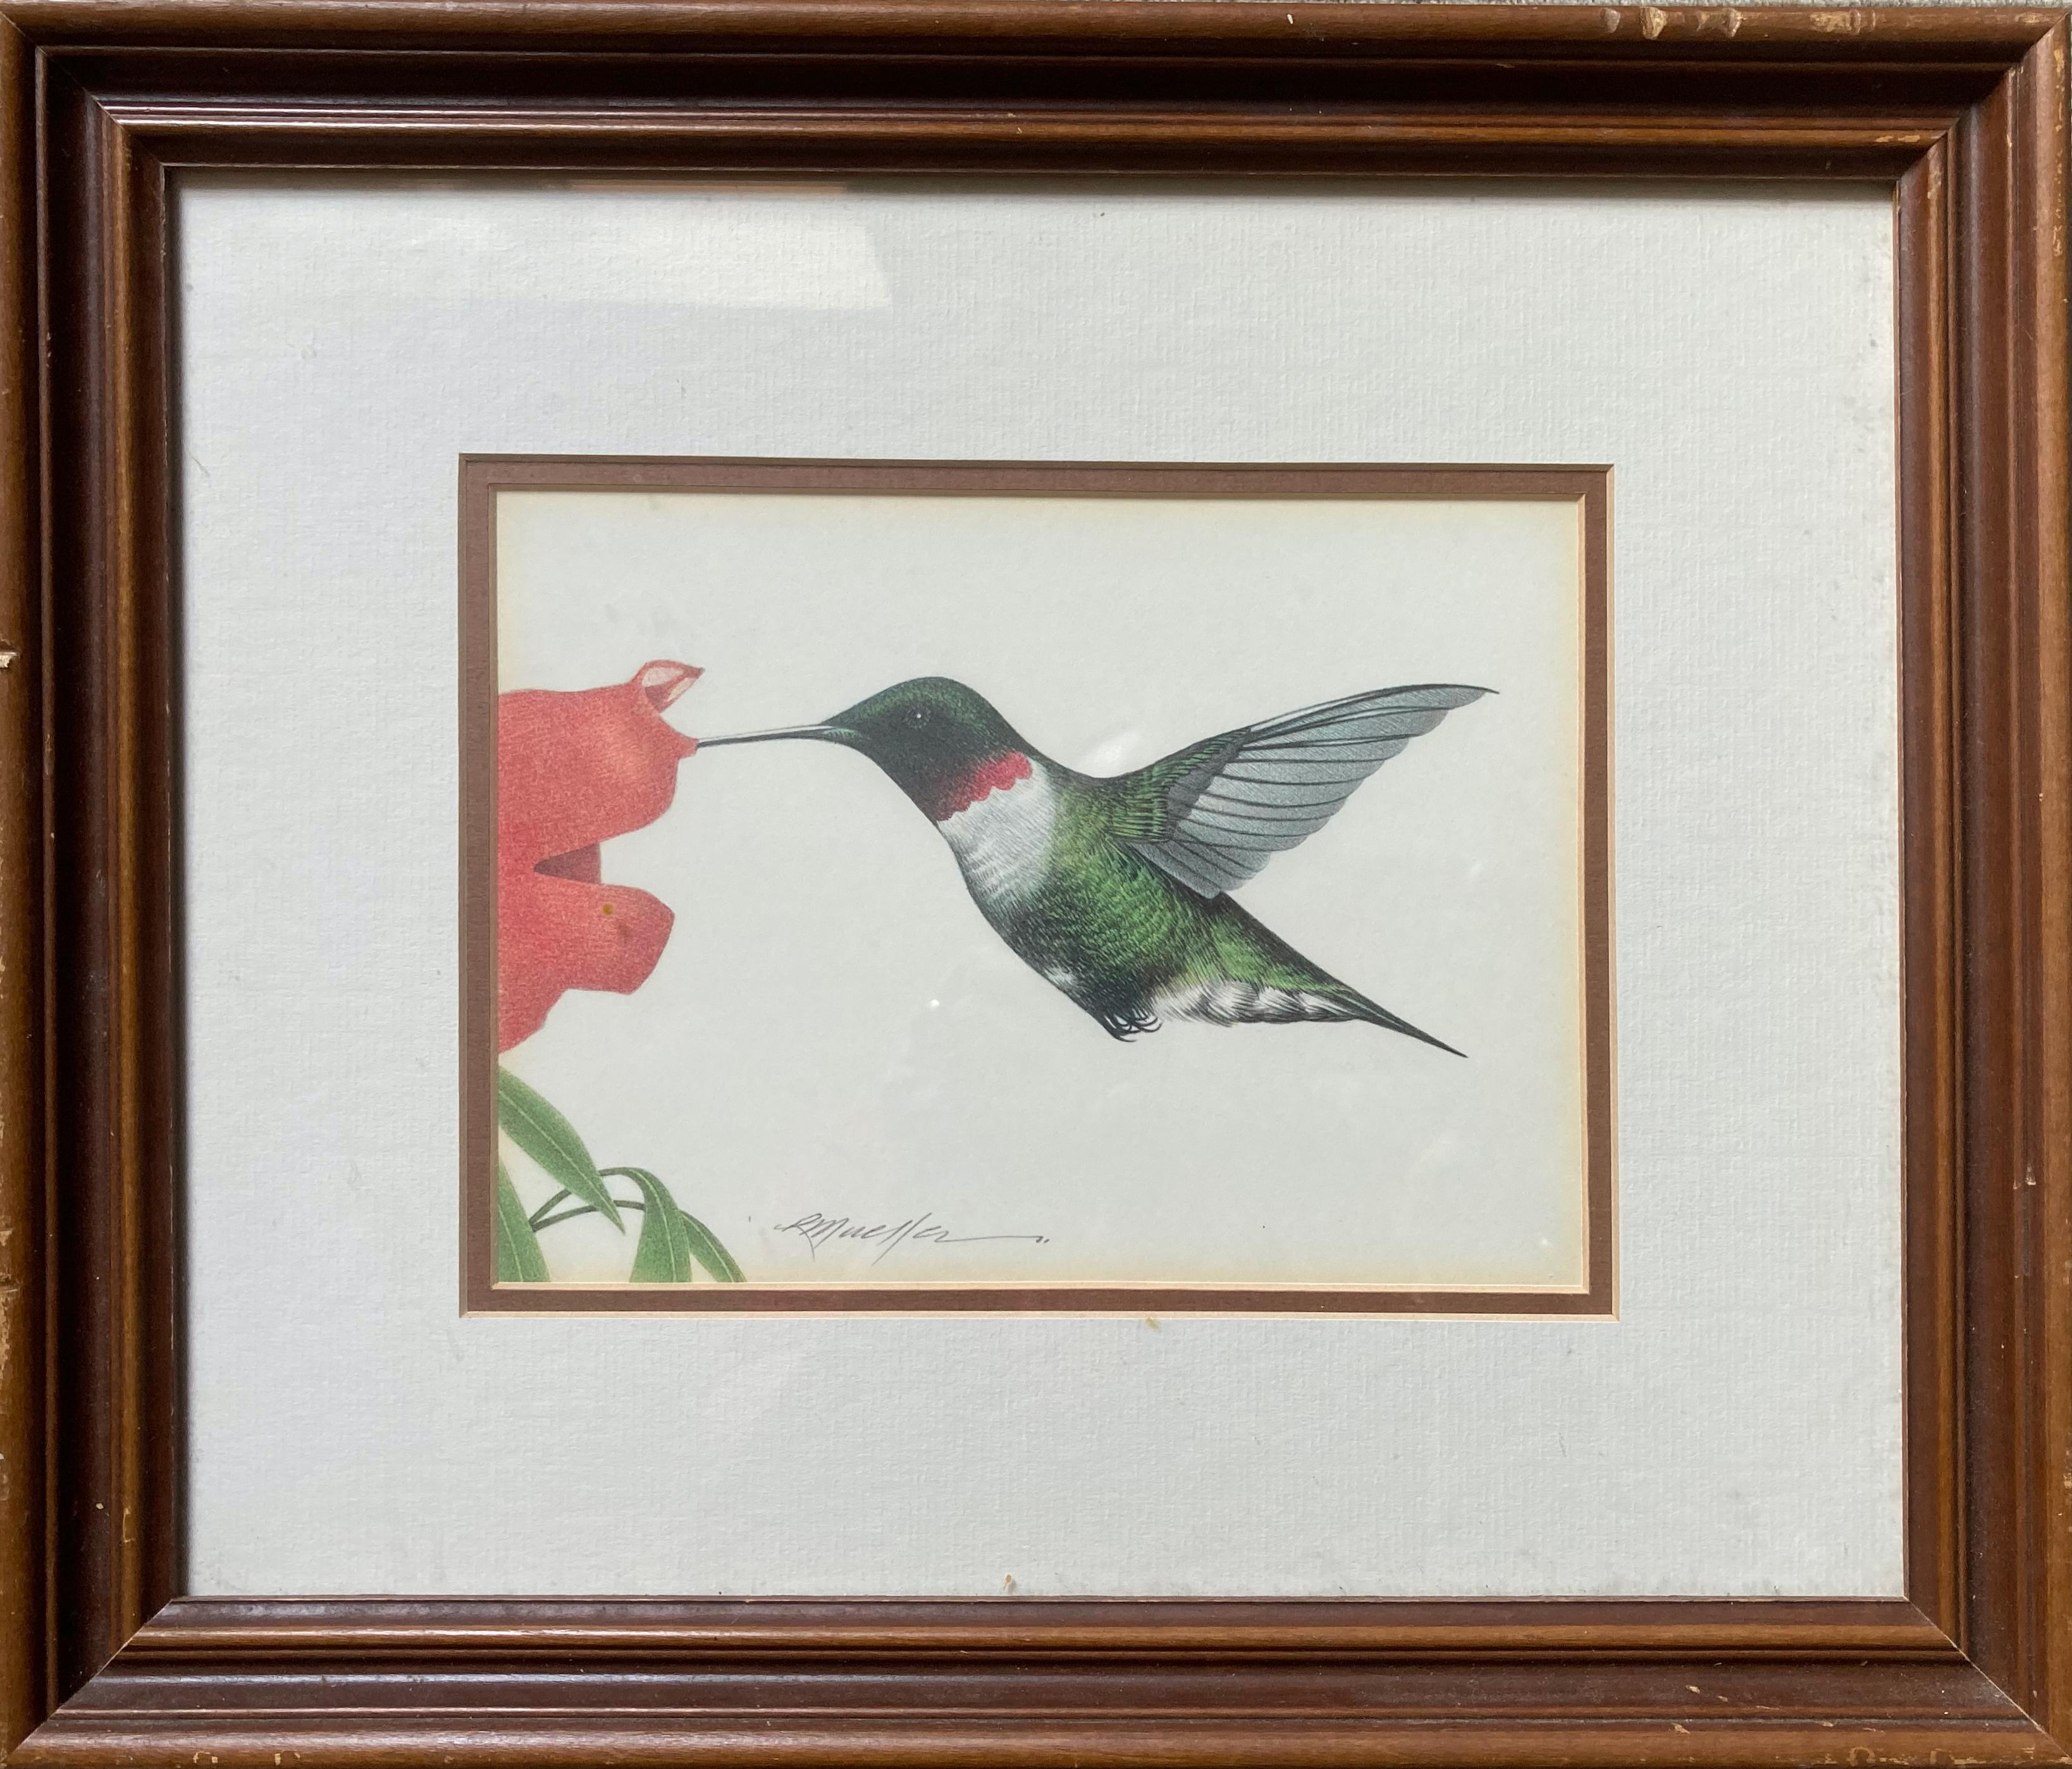 Richard Mueller Animal Painting - Hummingbird ("The Whizzer") - Framed Modern Realistic Bird Drawing